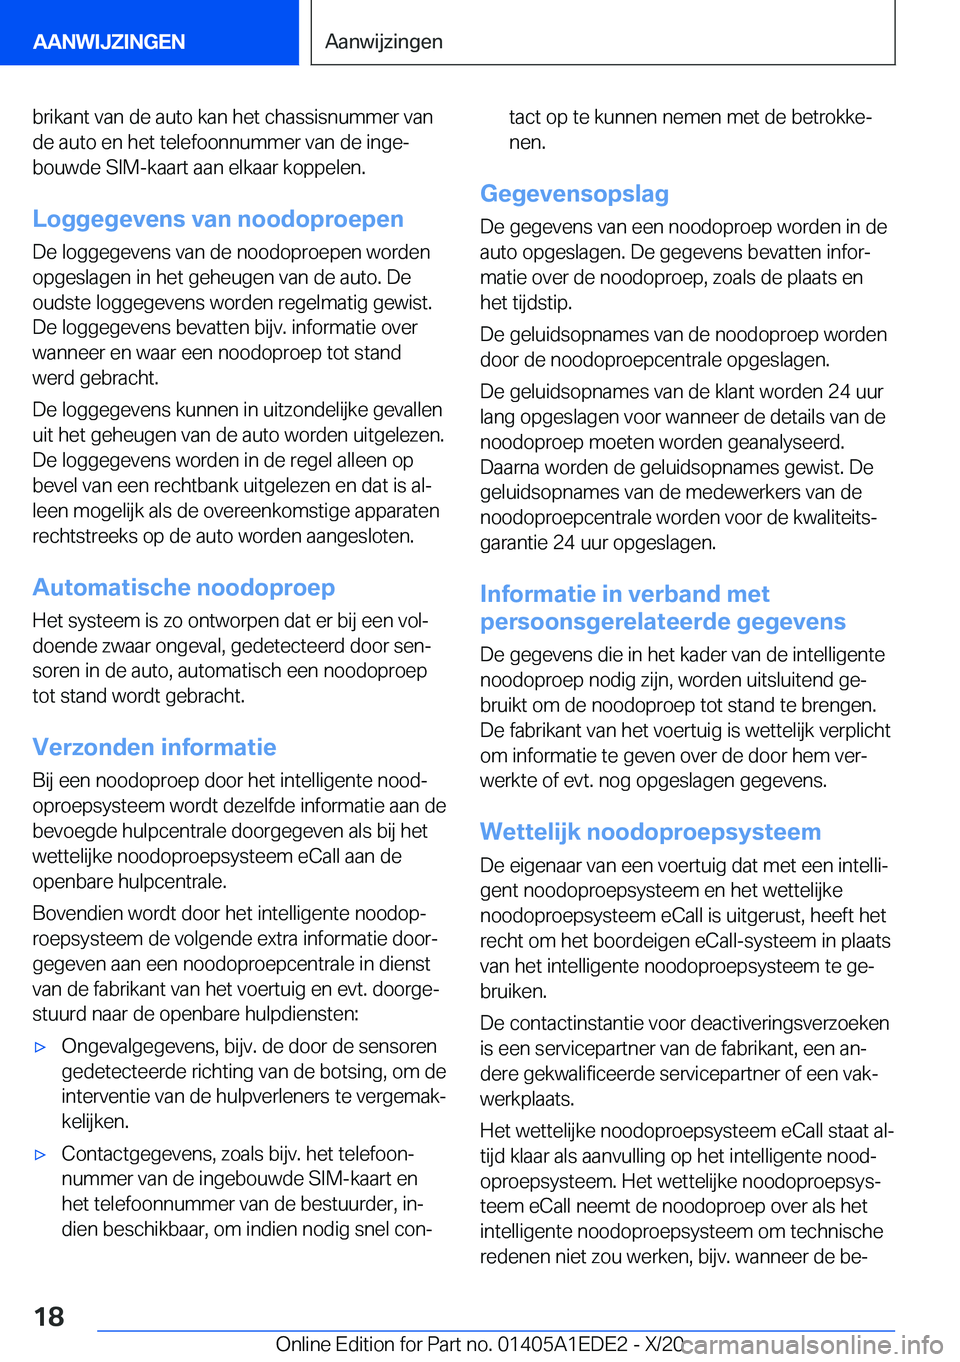 BMW 8 SERIES CONVERTIBLE 2021  Instructieboekjes (in Dutch) �b�r�i�k�a�n�t��v�a�n��d�e��a�u�t�o��k�a�n��h�e�t��c�h�a�s�s�i�s�n�u�m�m�e�r��v�a�n
�d�e��a�u�t�o��e�n��h�e�t��t�e�l�e�f�o�o�n�n�u�m�m�e�r��v�a�n��d�e��i�n�g�ej
�b�o�u�w�d�e��S�I�M�-�k